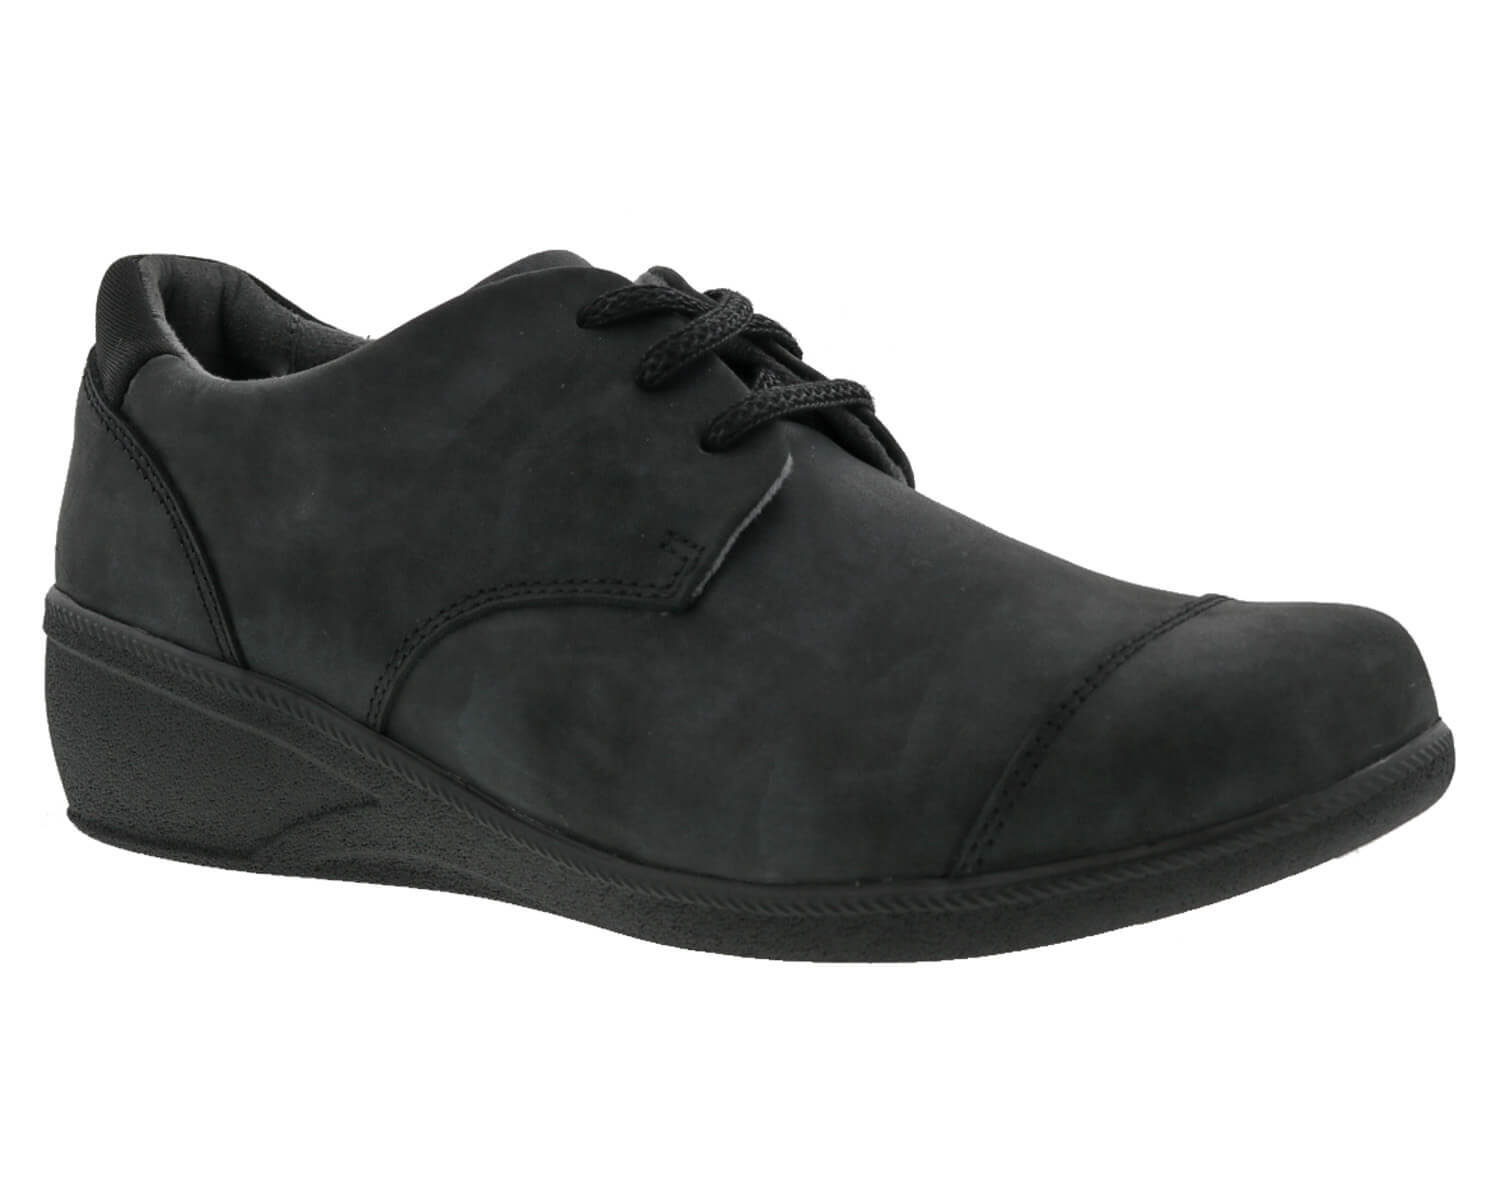 Drew Shoes Jemma 10855 Women's Casual Shoe - Extra Wide